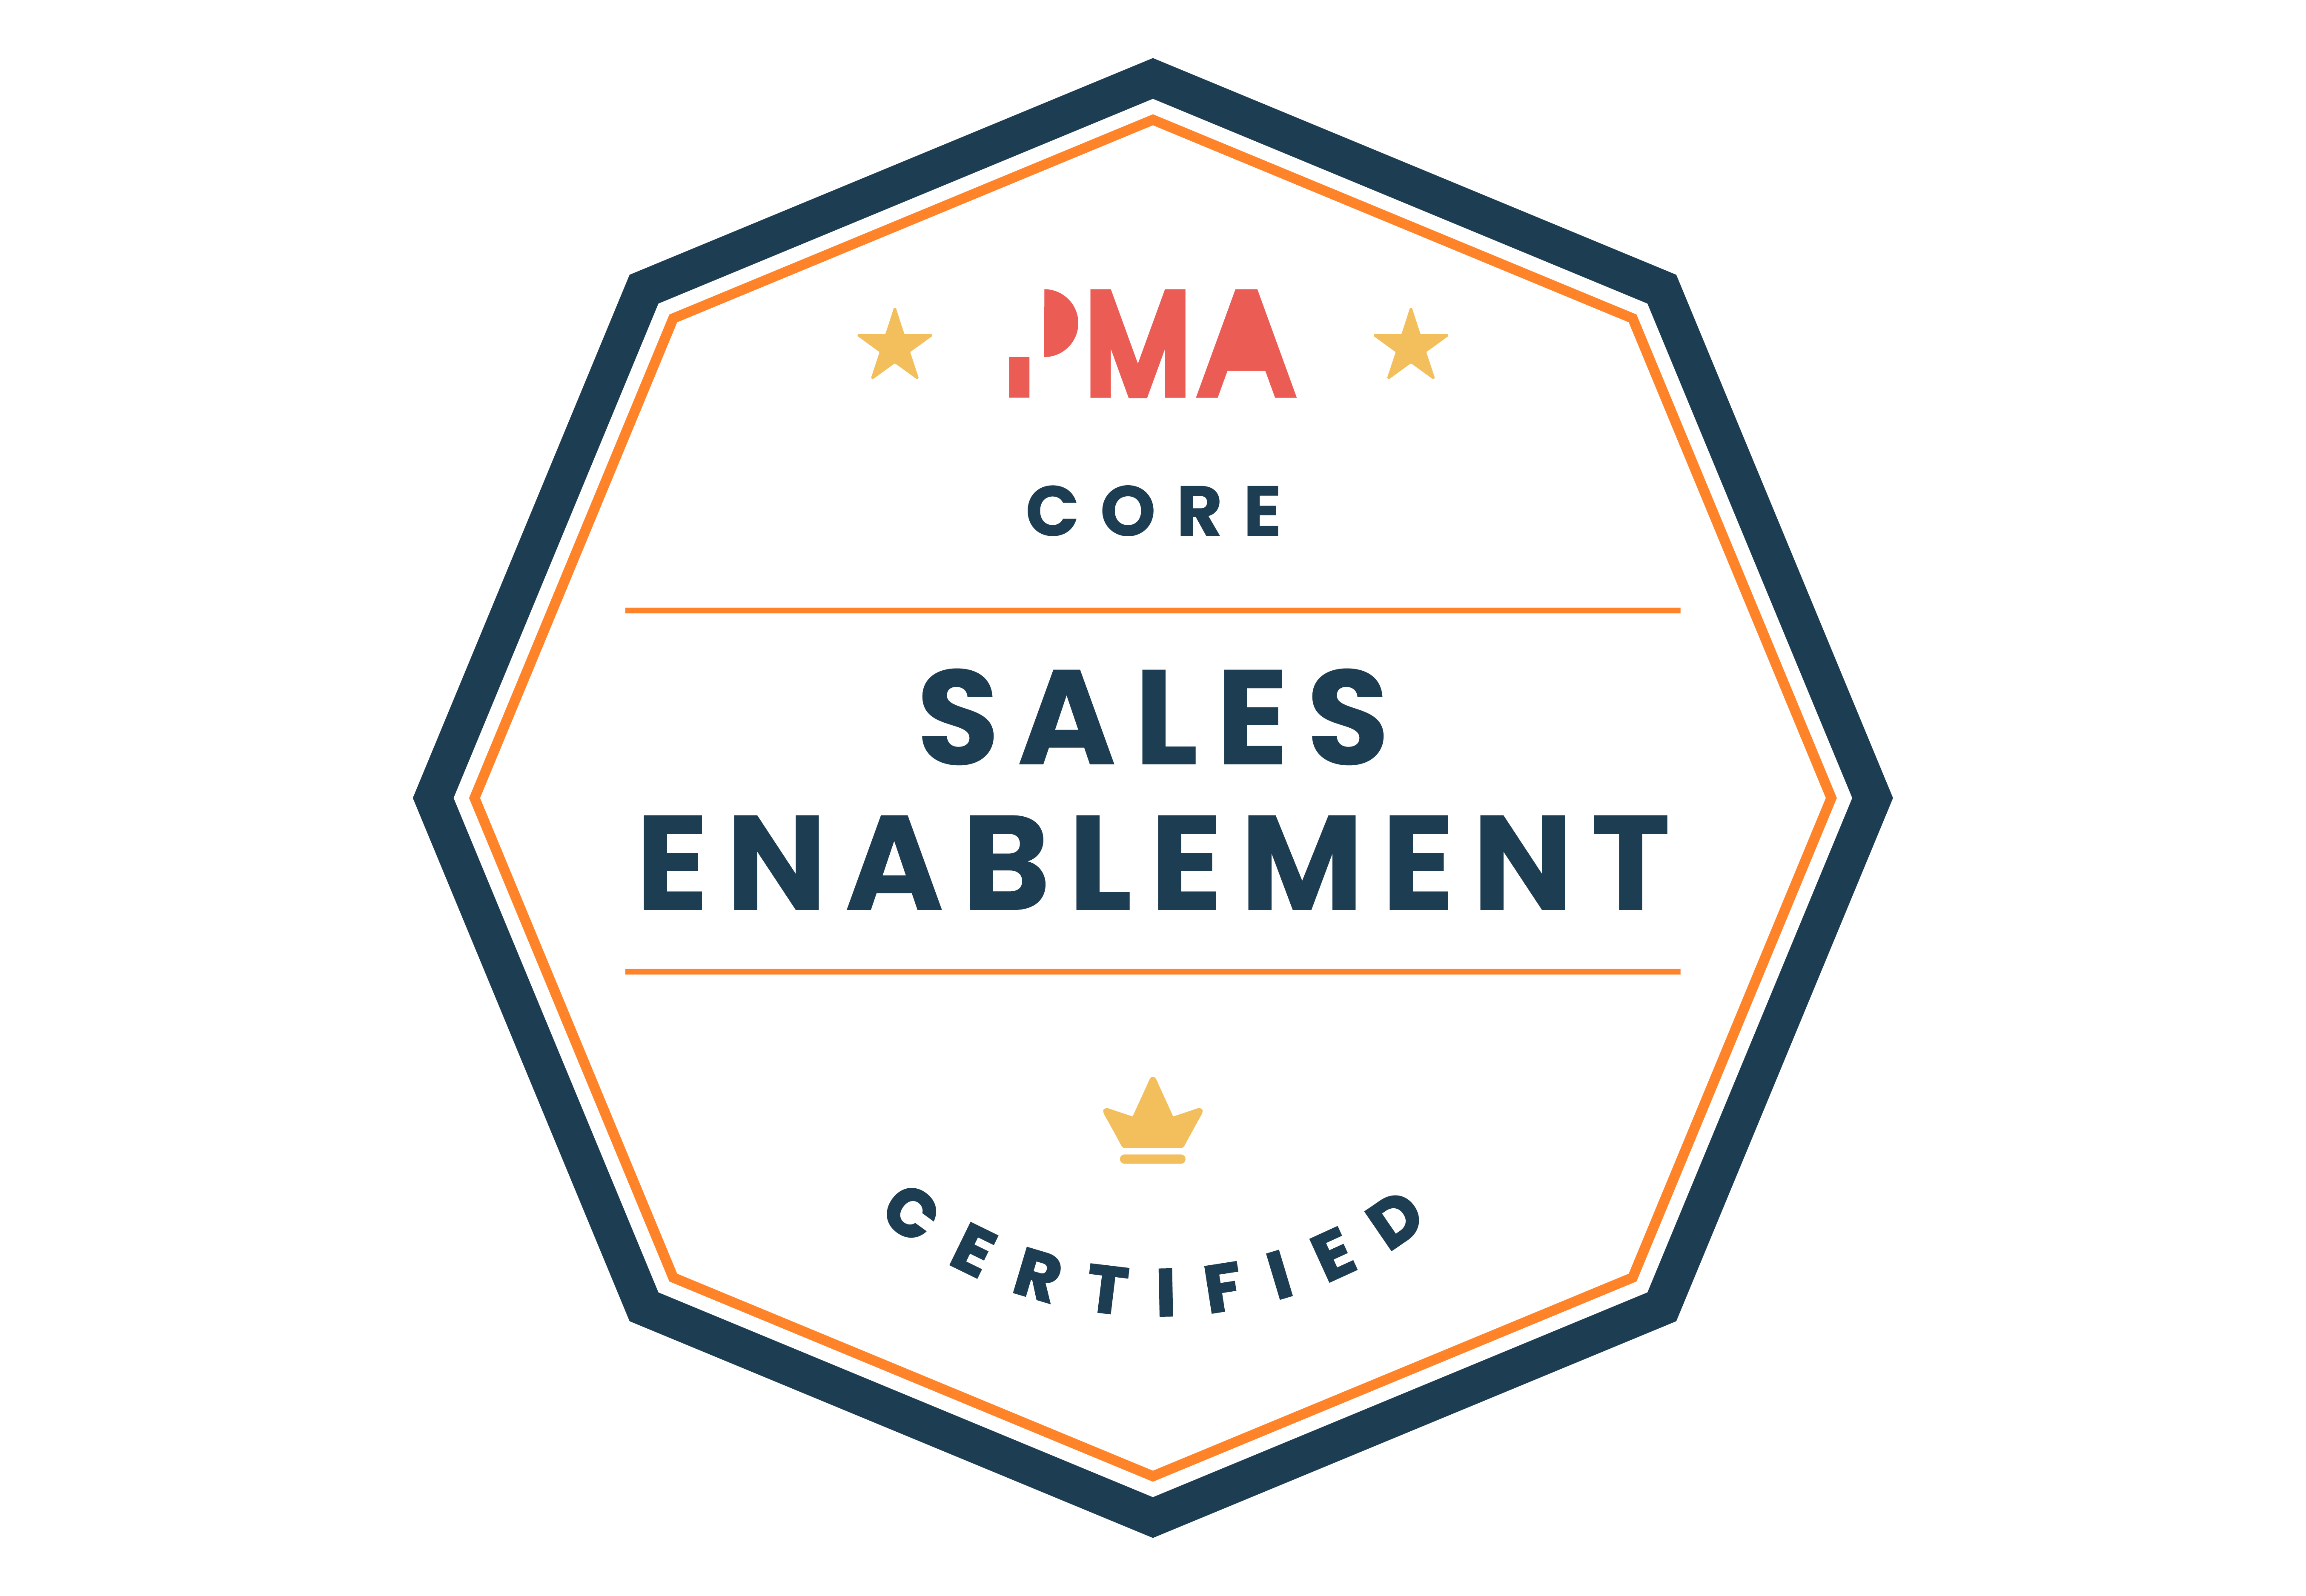 Sales Enablement Certified: Core badge